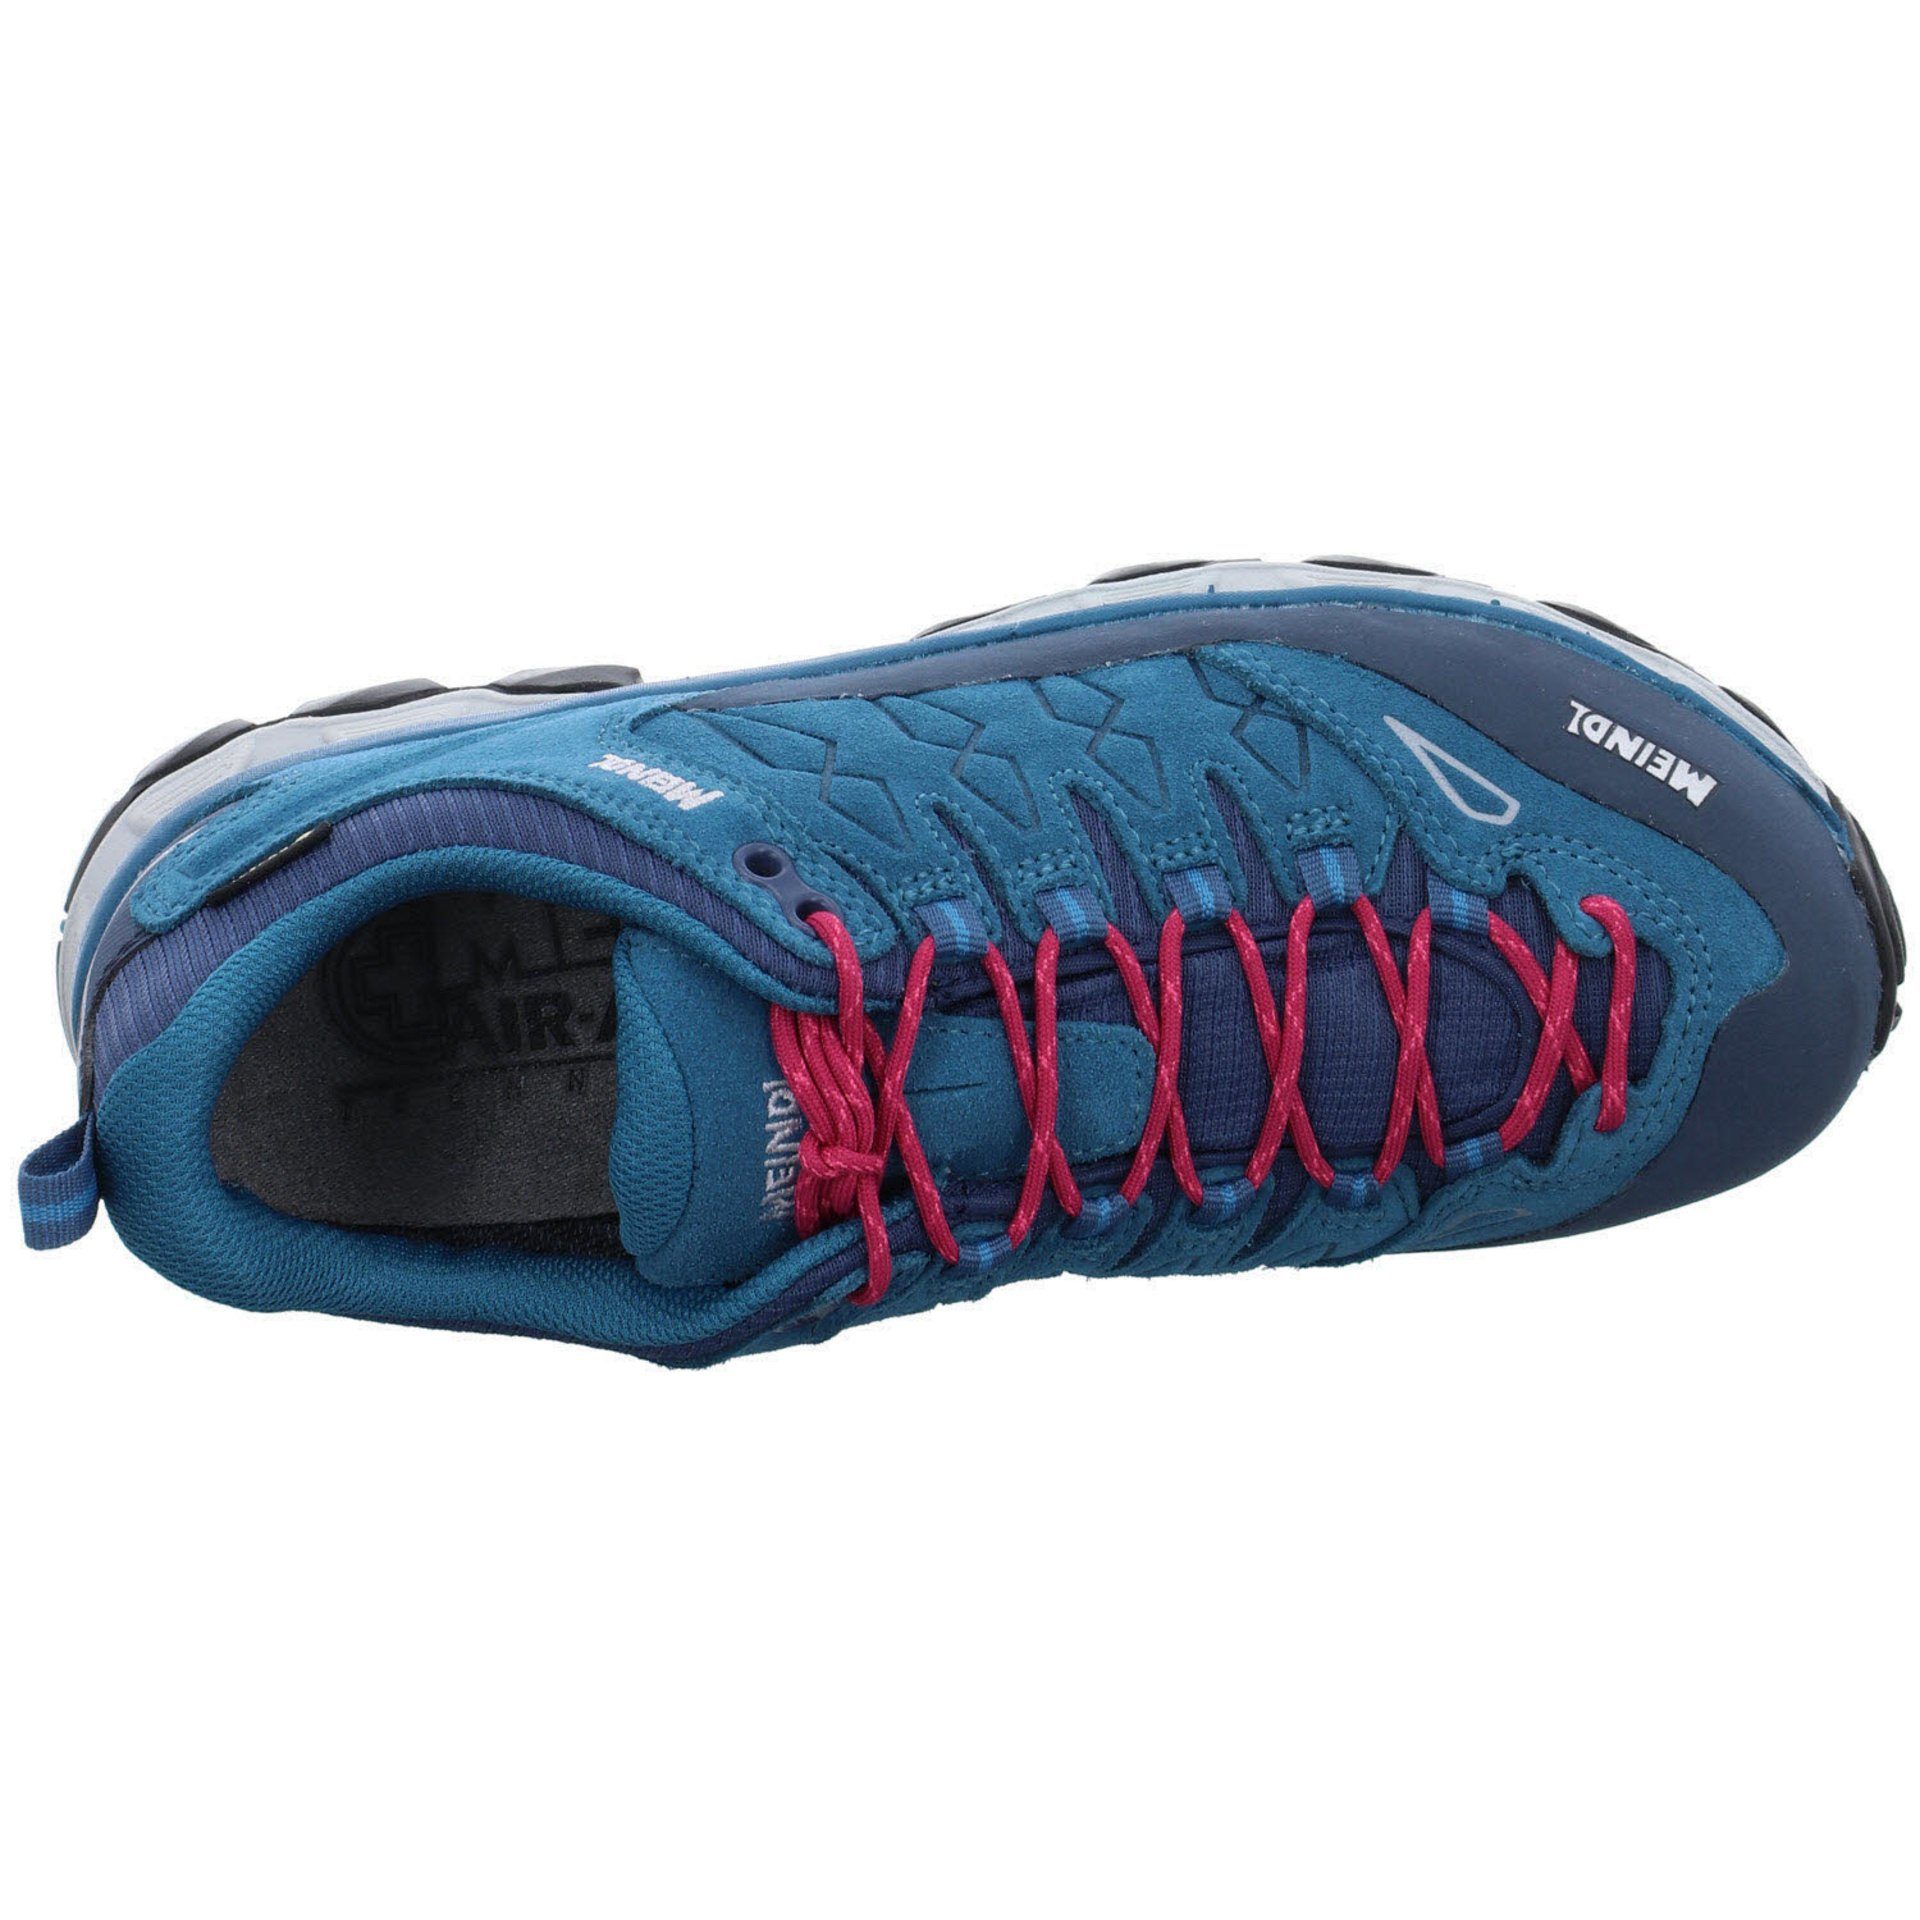 Outdoor Damen Outdoorschuh PETROL/MAGENTA Schuhe Leder-/Textilkombination Meindl